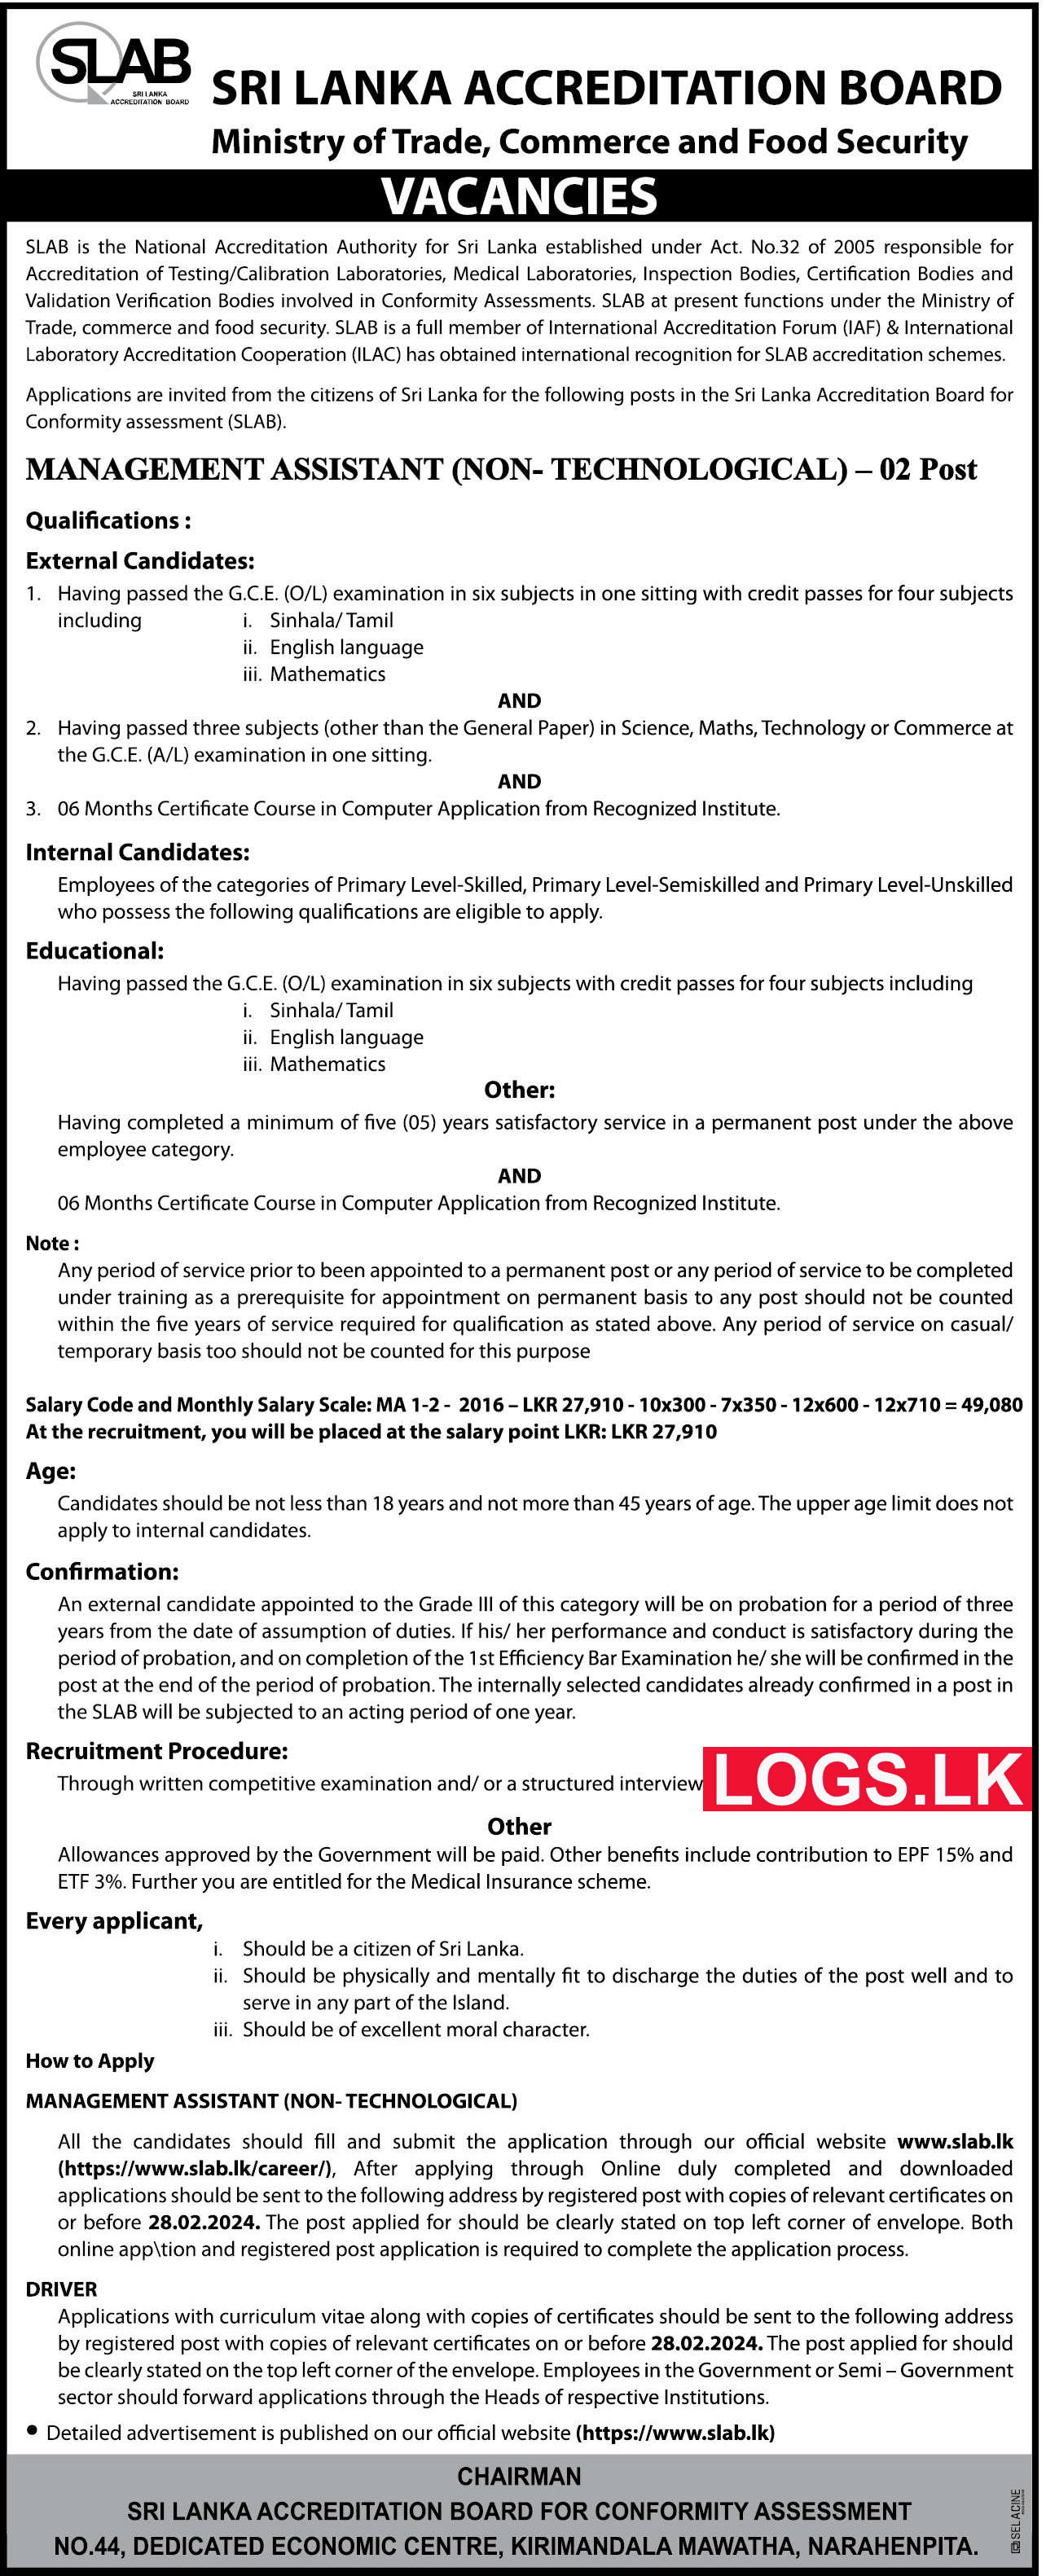 Management Assistant - Sri Lanka Accreditation Board Vacancies 2024 Application Form, Details Download